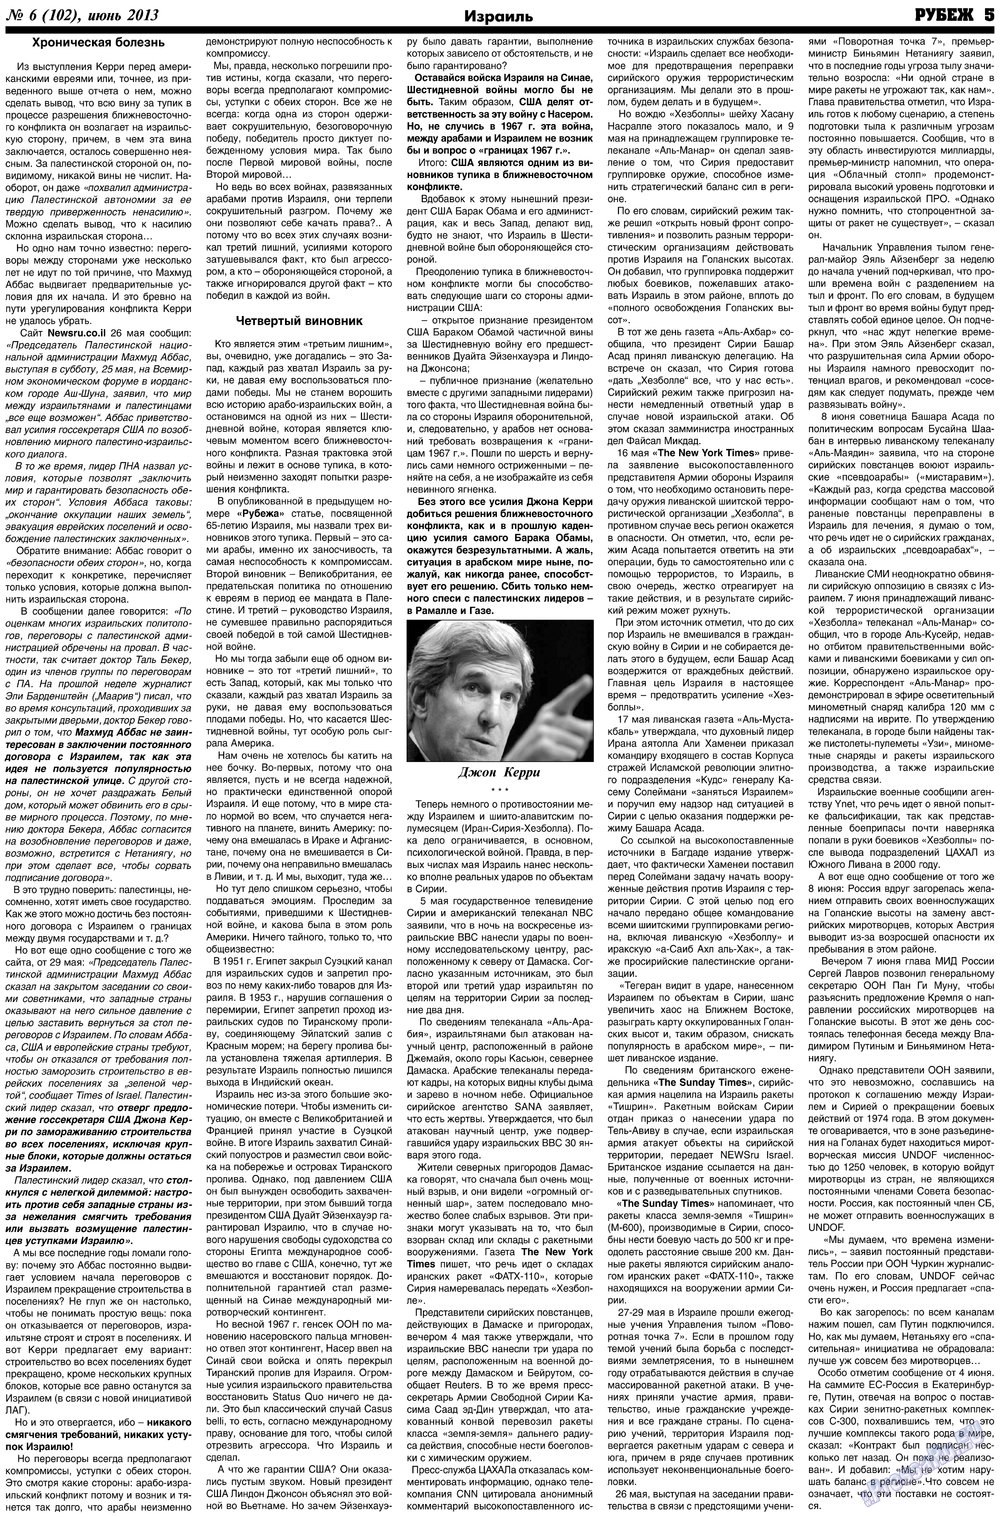 Рубеж, газета. 2013 №6 стр.5